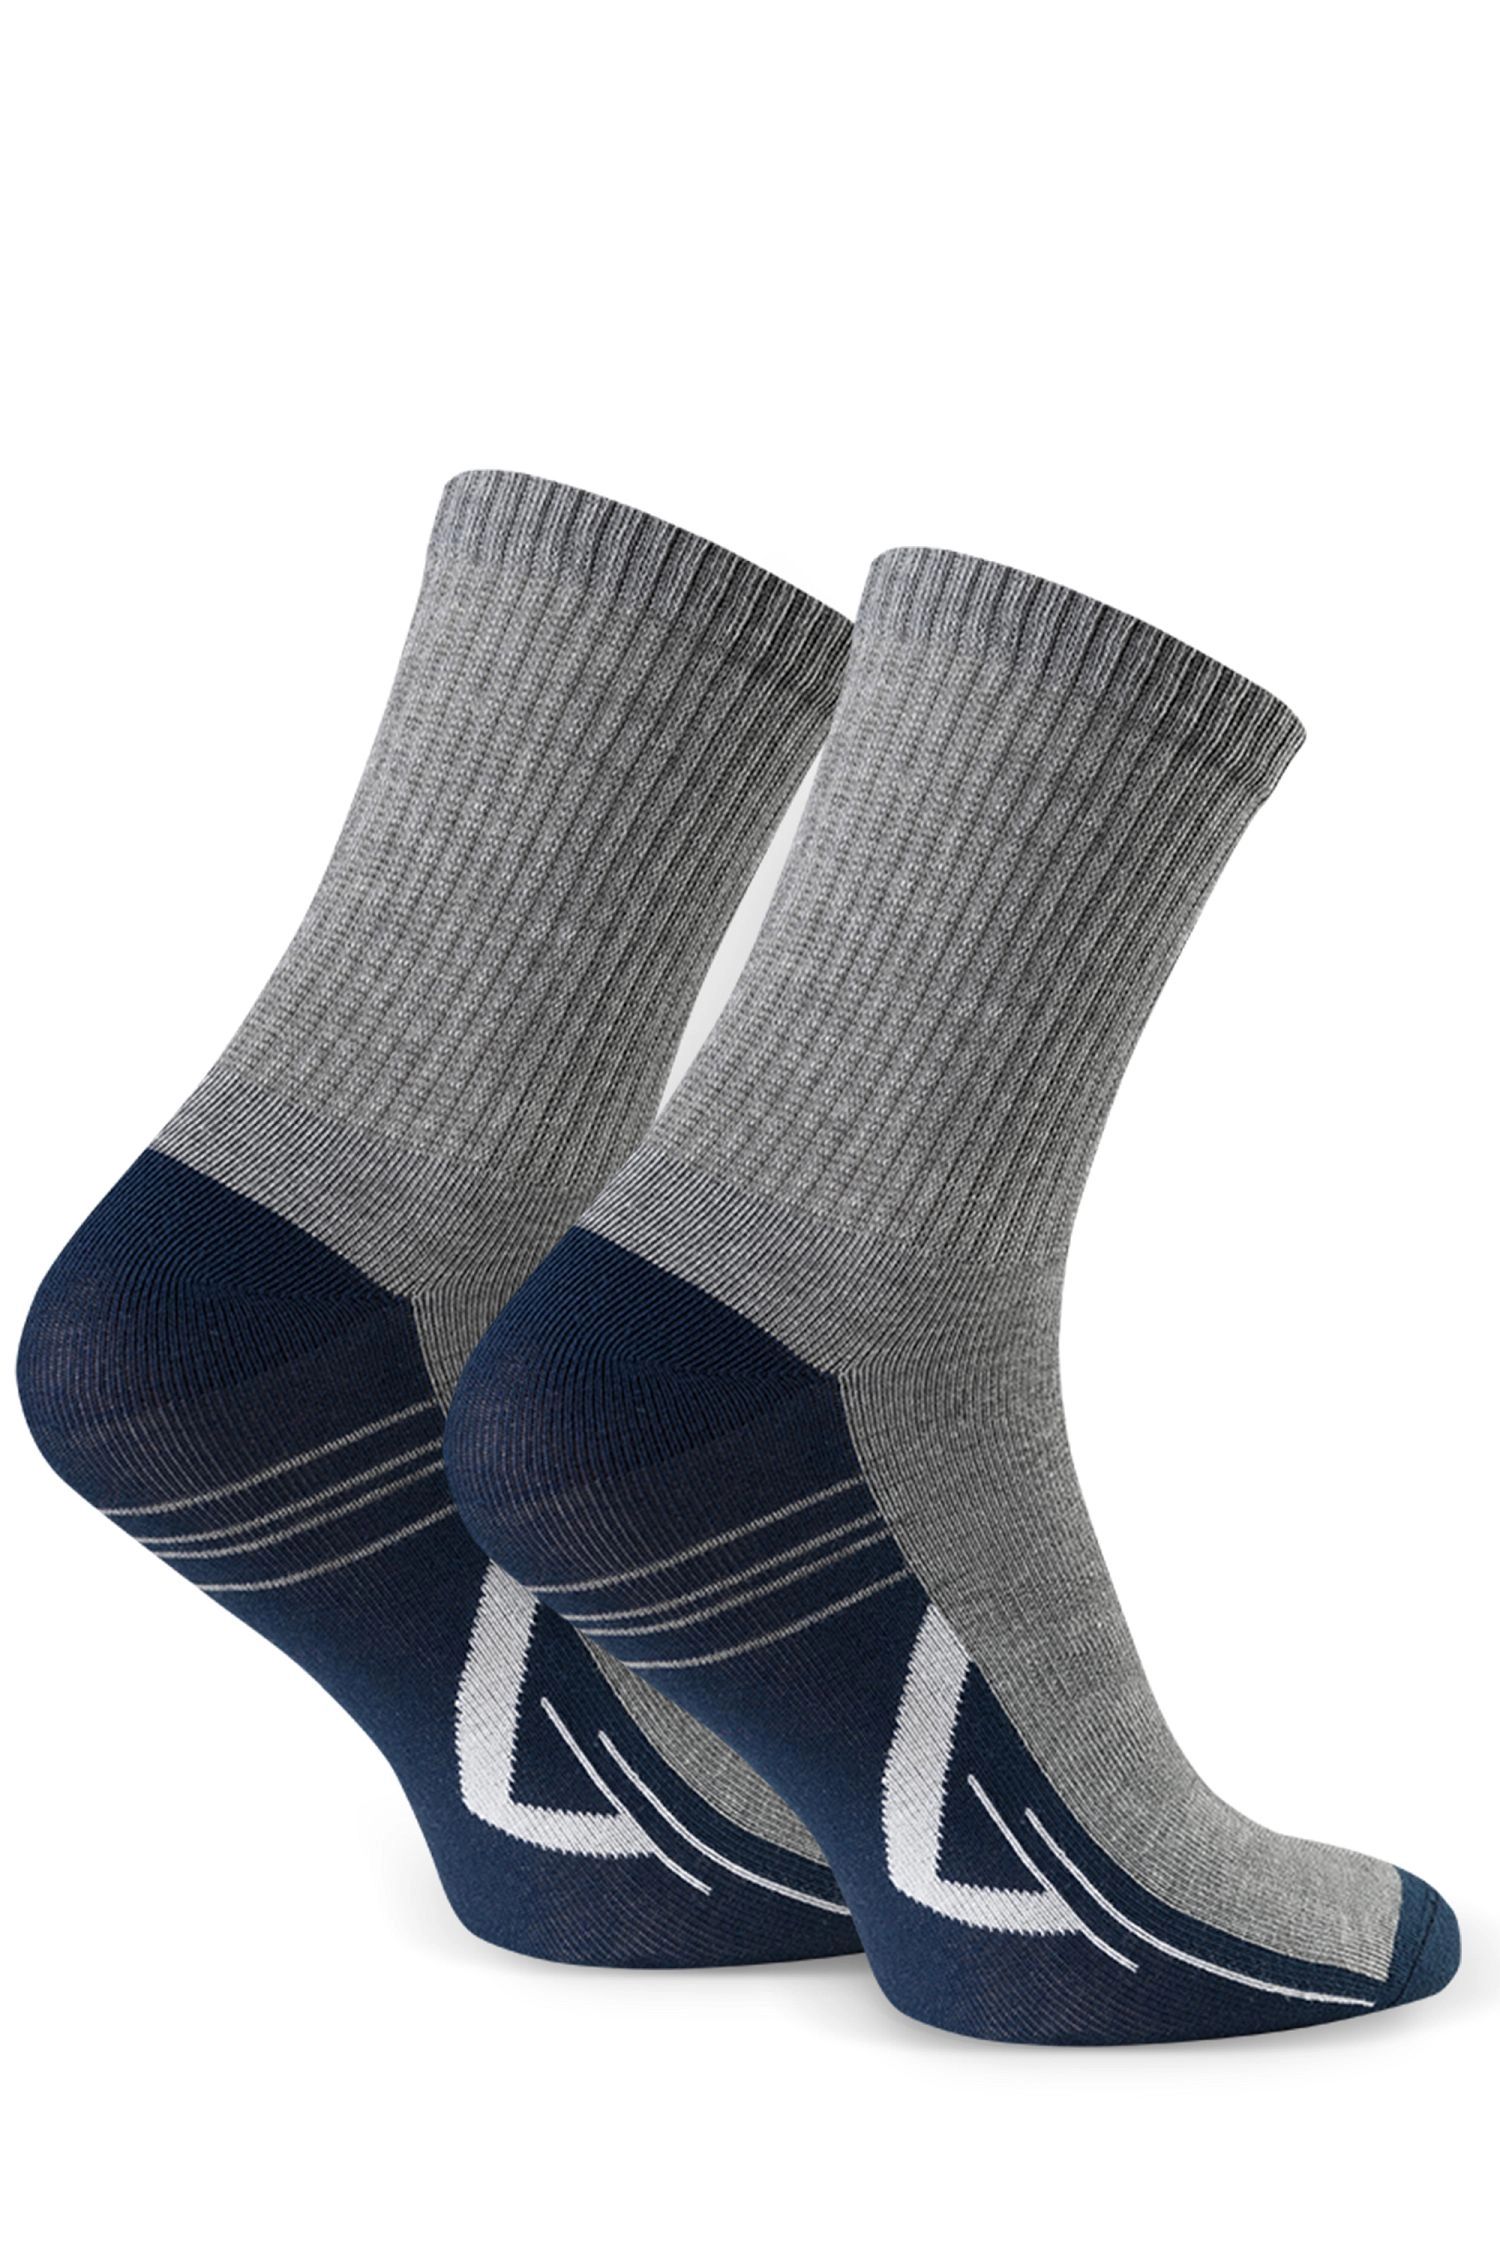 E-shop Dámske ponožky 022 324 grey